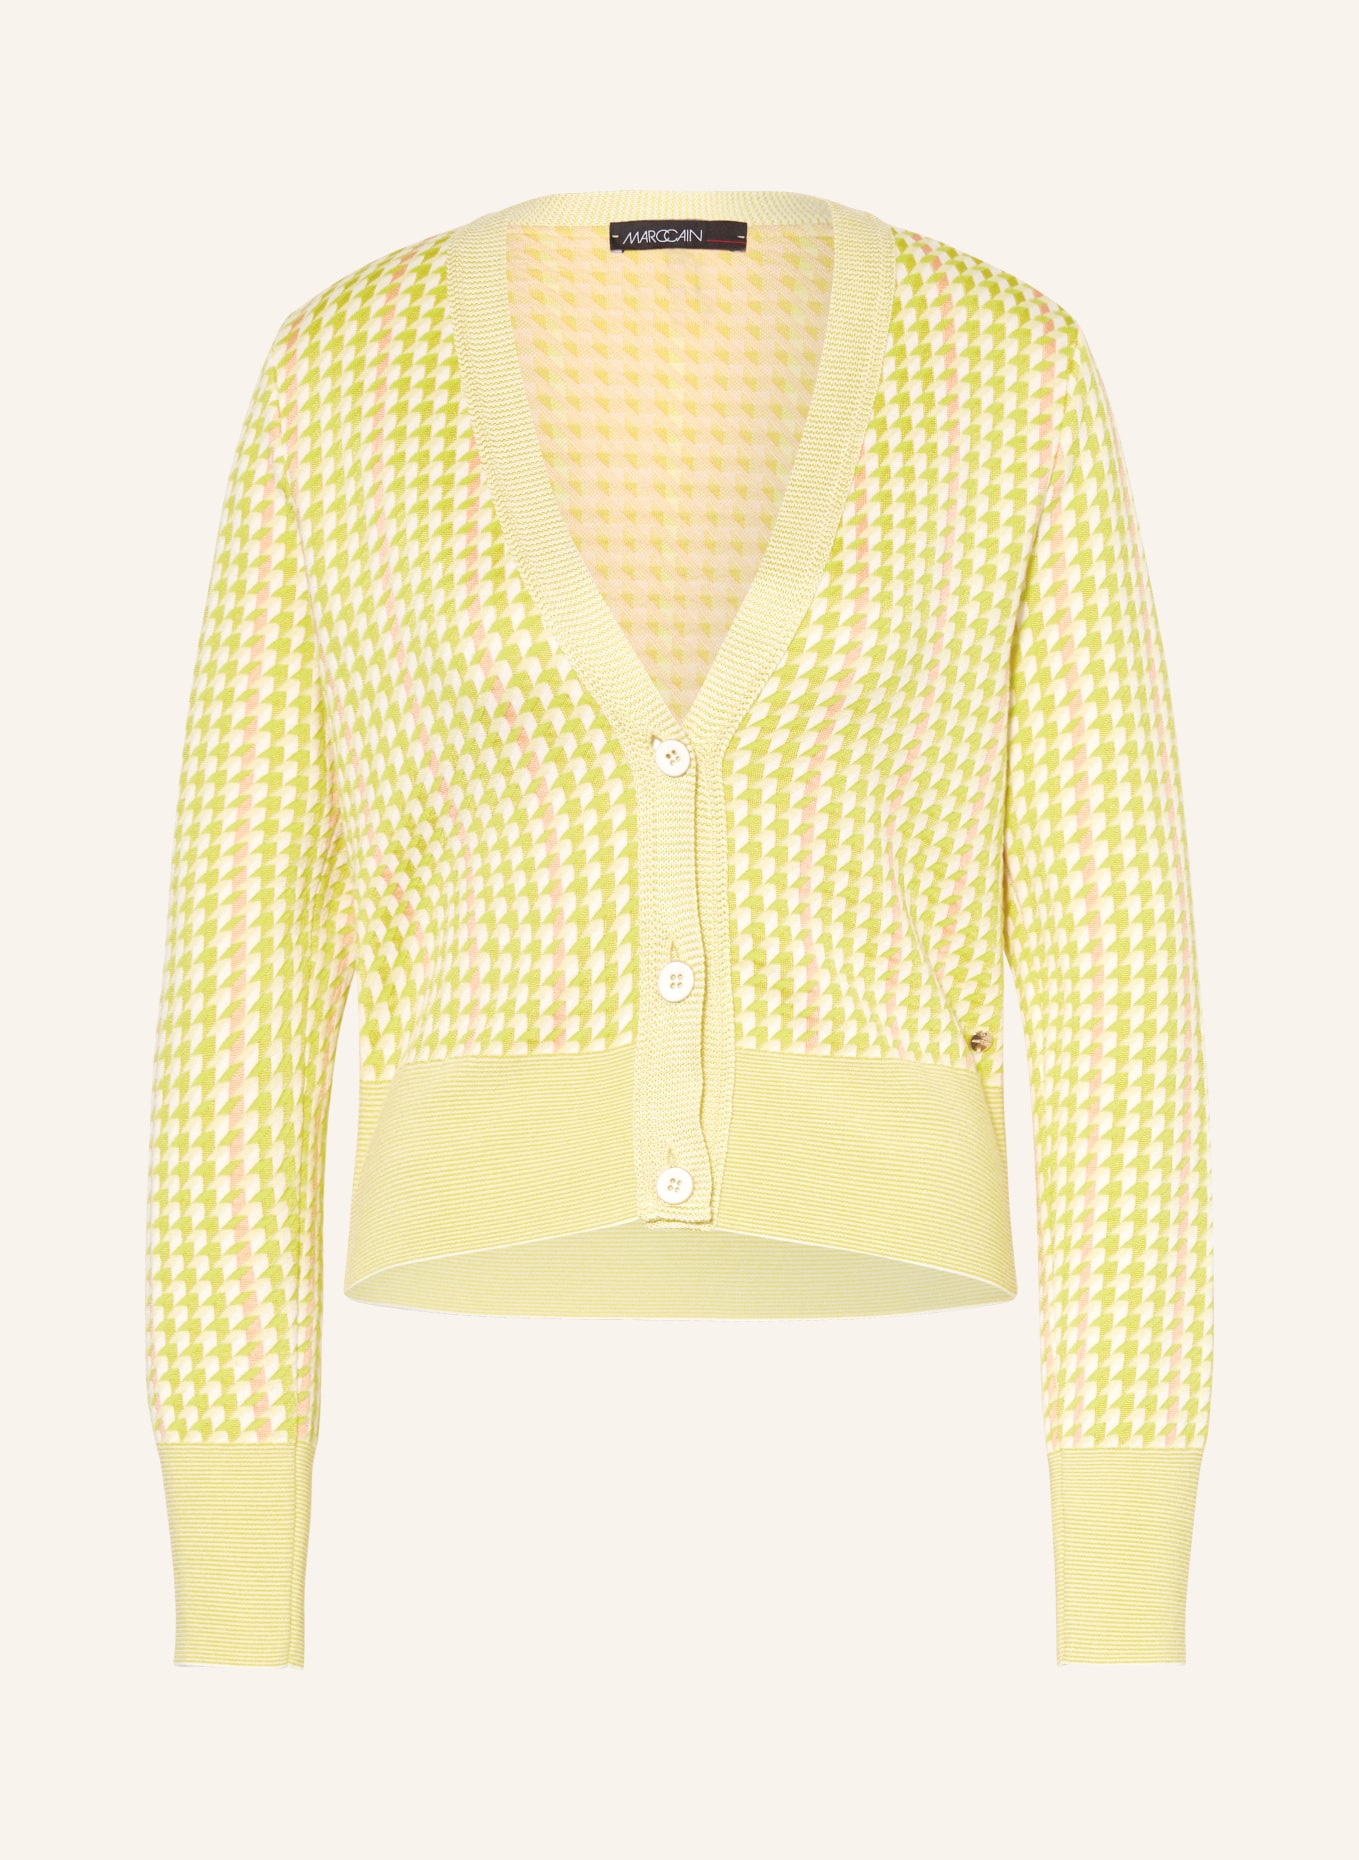 MARC CAIN Strickjacke, Farbe: 420 pale lemon (Bild 1)